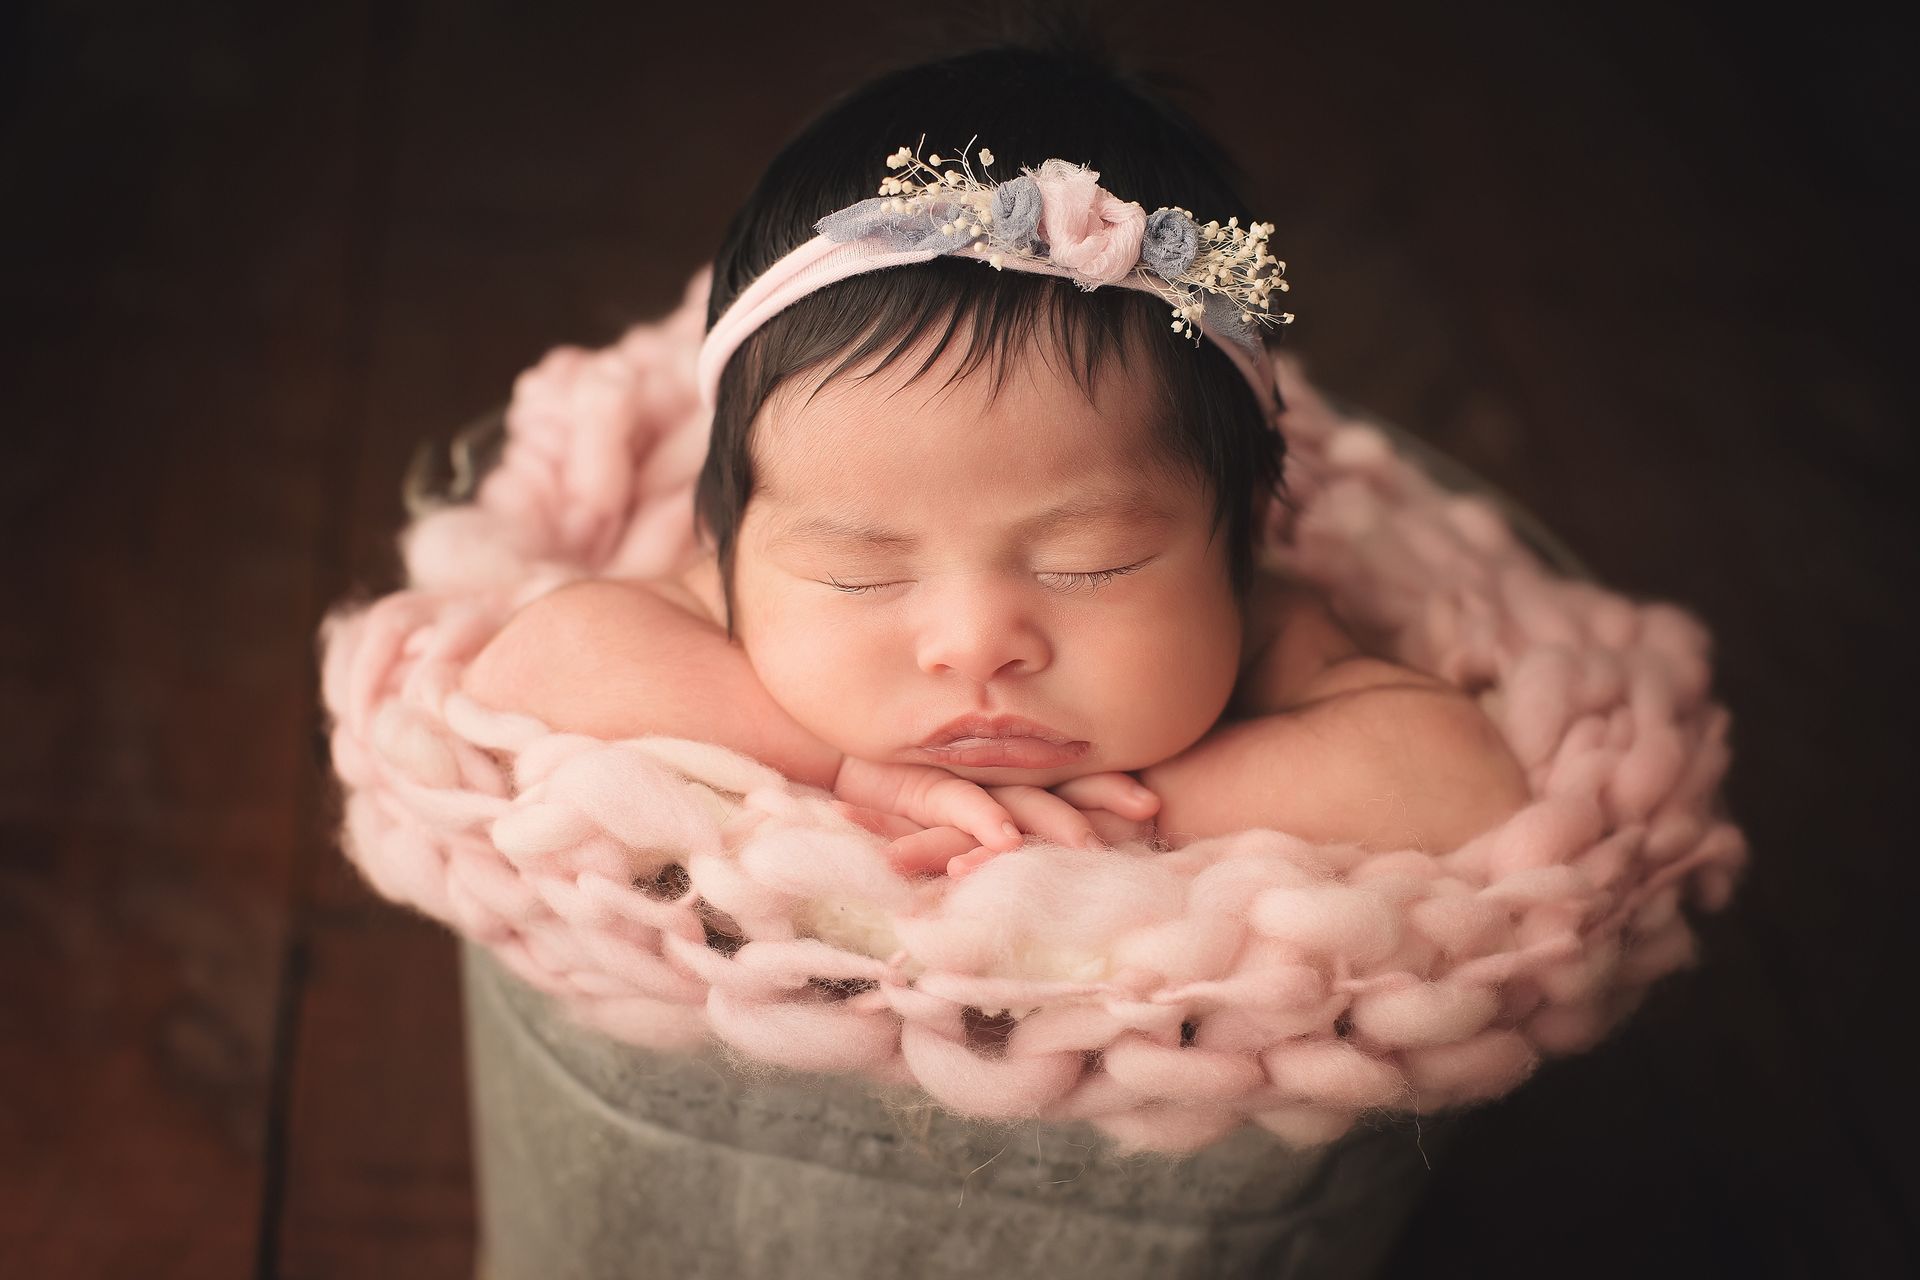 A newborn baby girl is sleeping in a bucket with a pink headband.